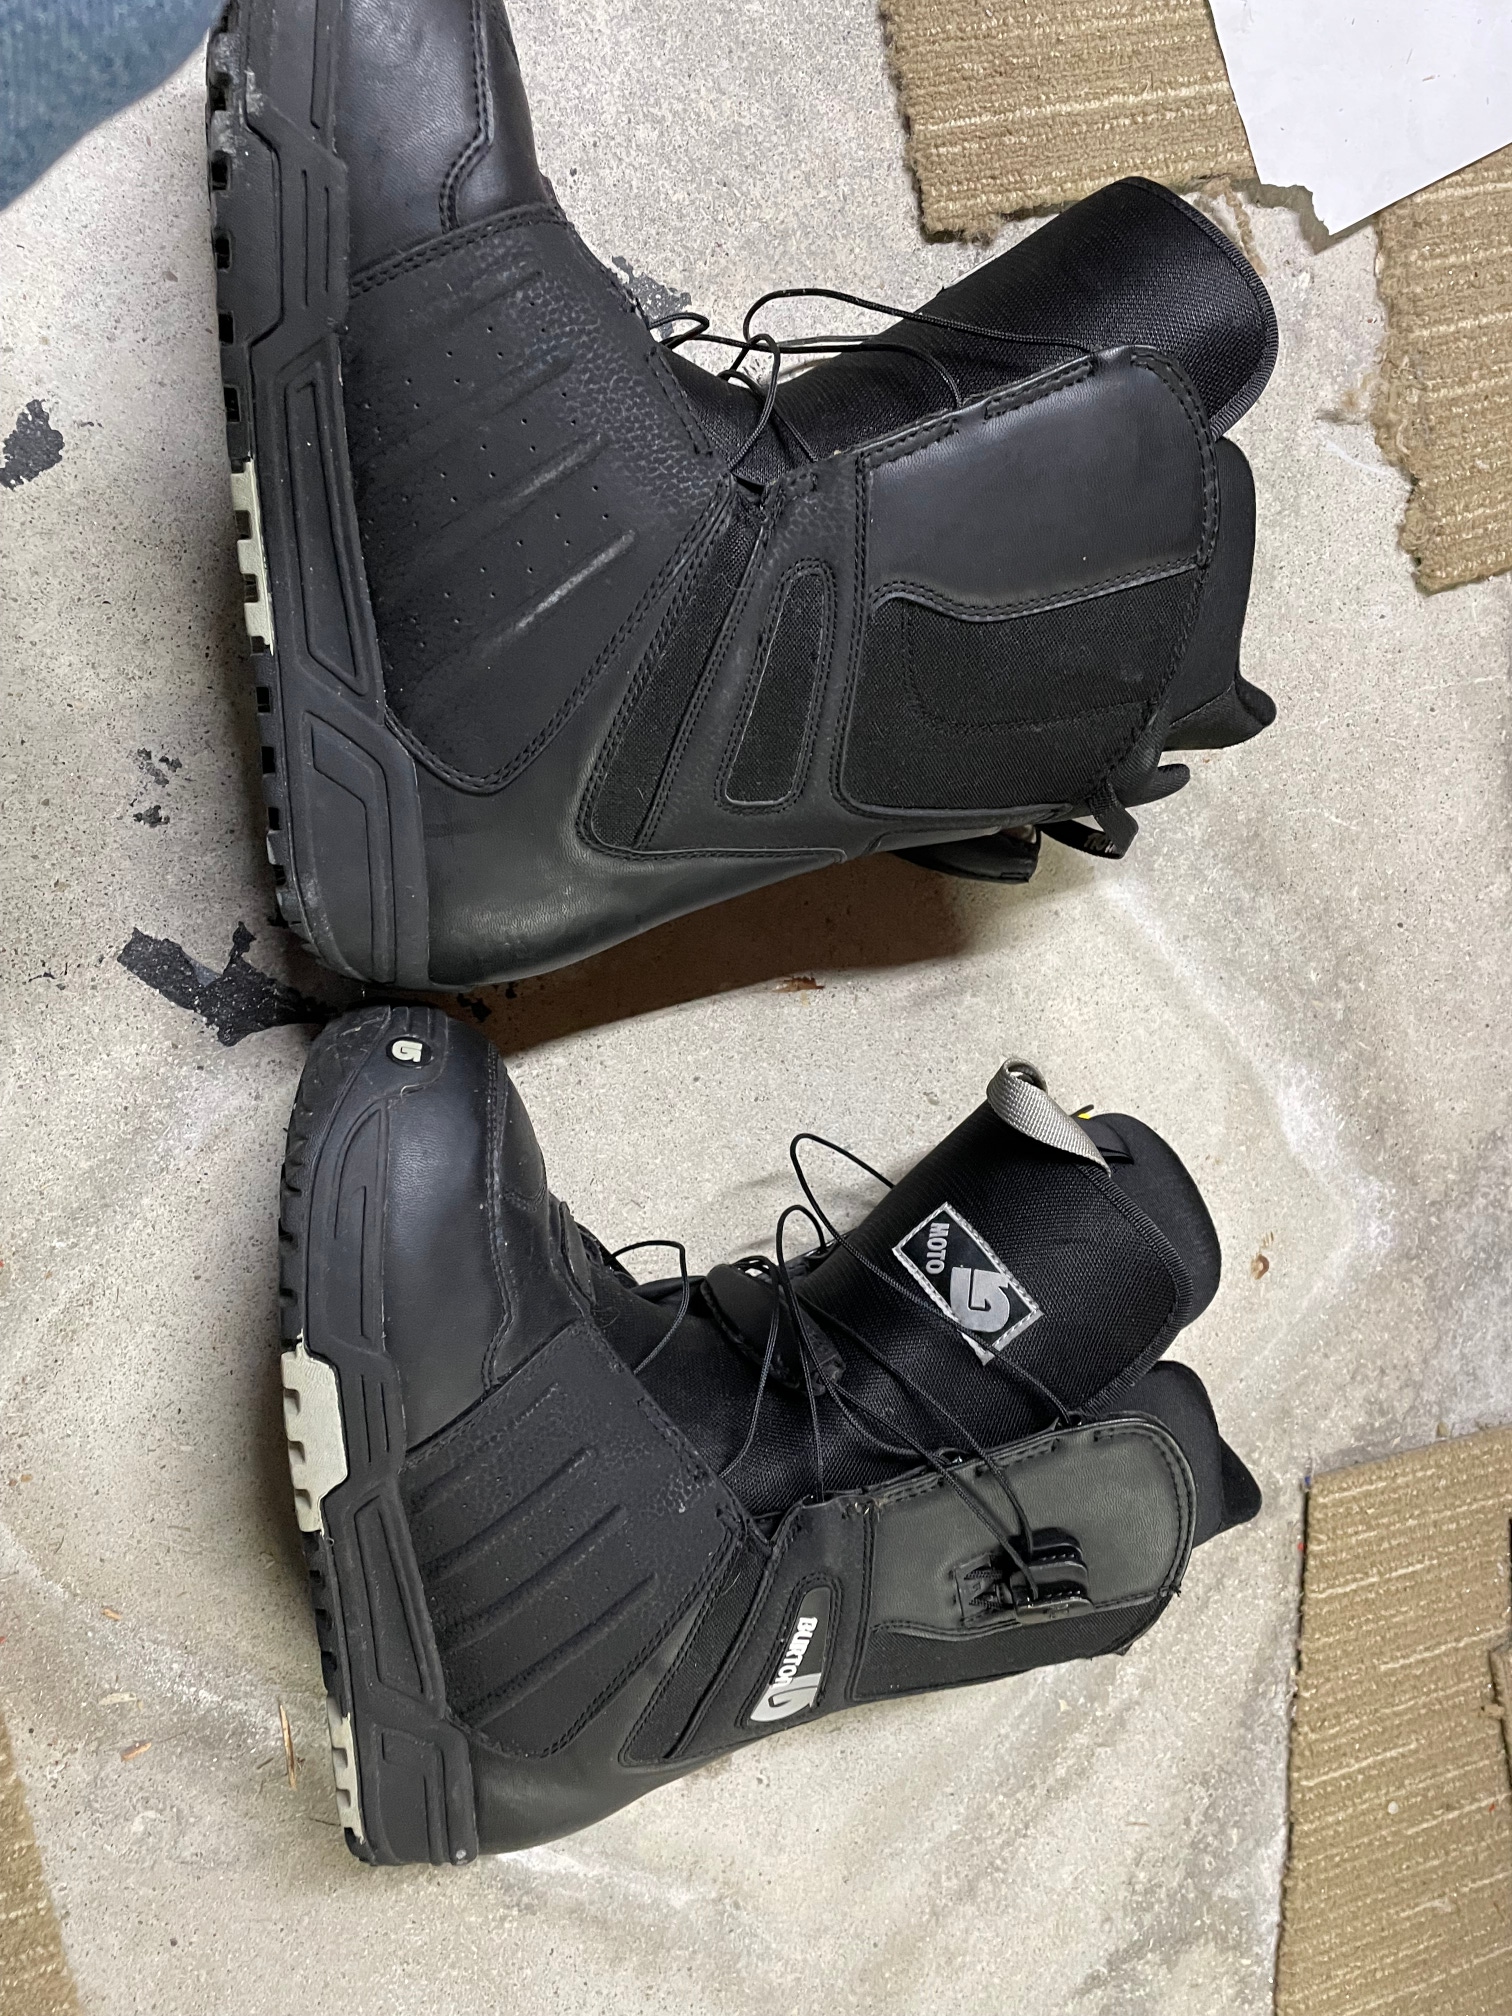 Used Size 8.5 (Women's 9.5) Burton Moto Snowboard Boots